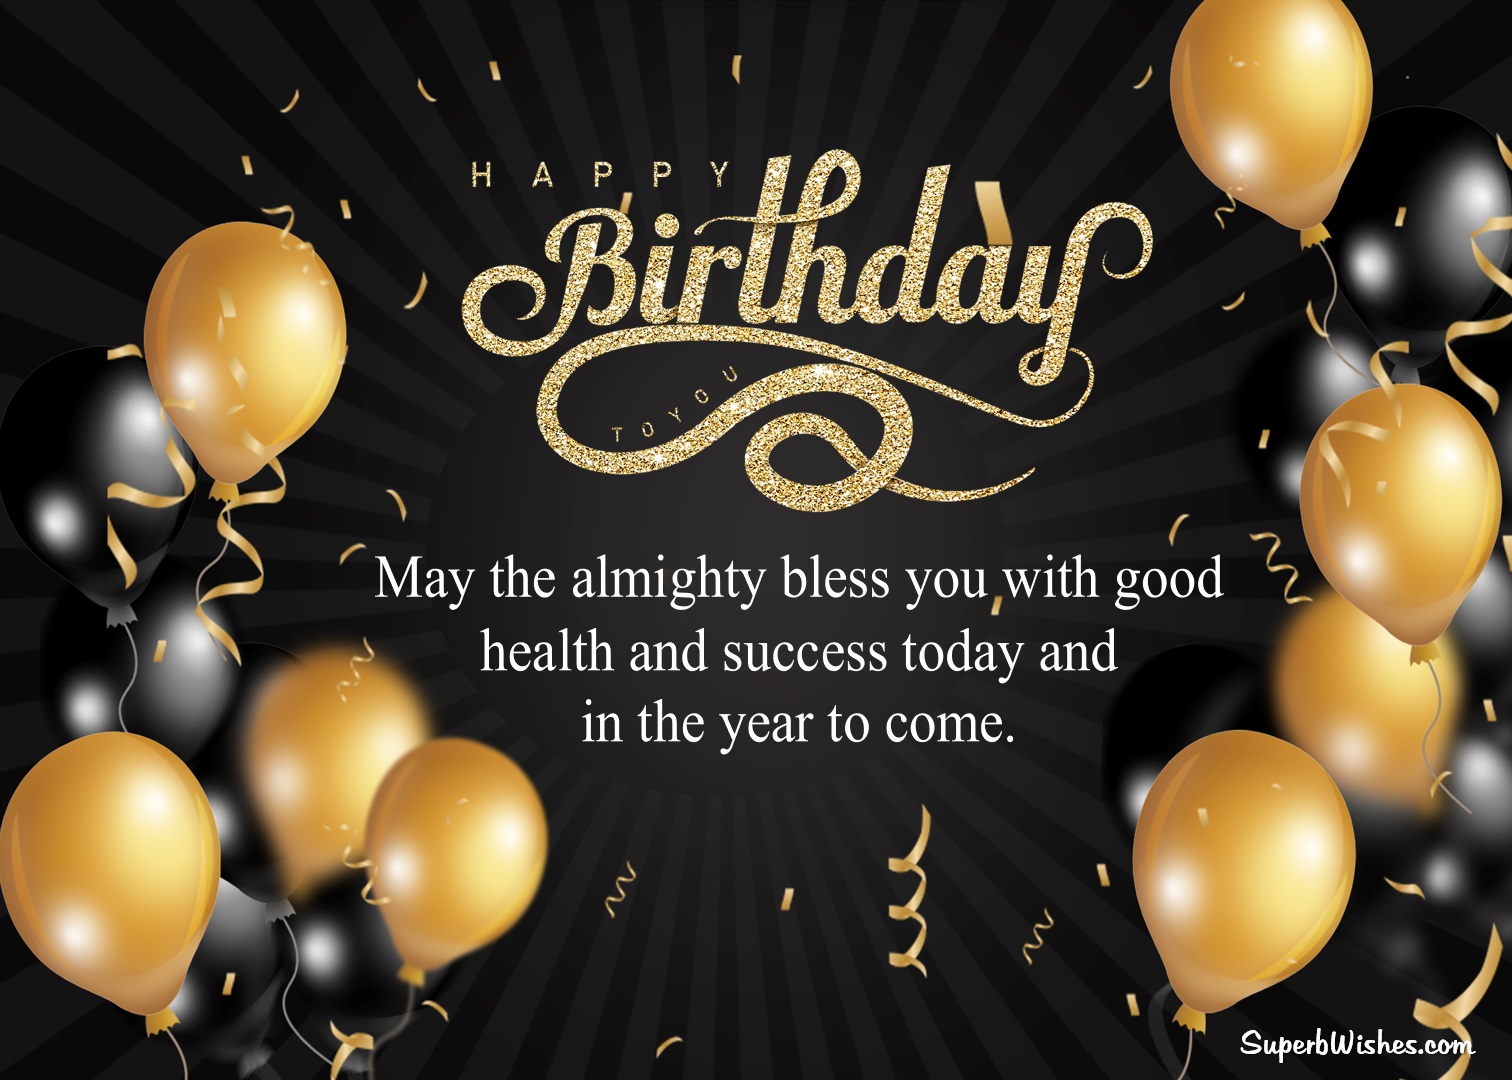 Wishing someone a happy birthday. Superbwishes.com